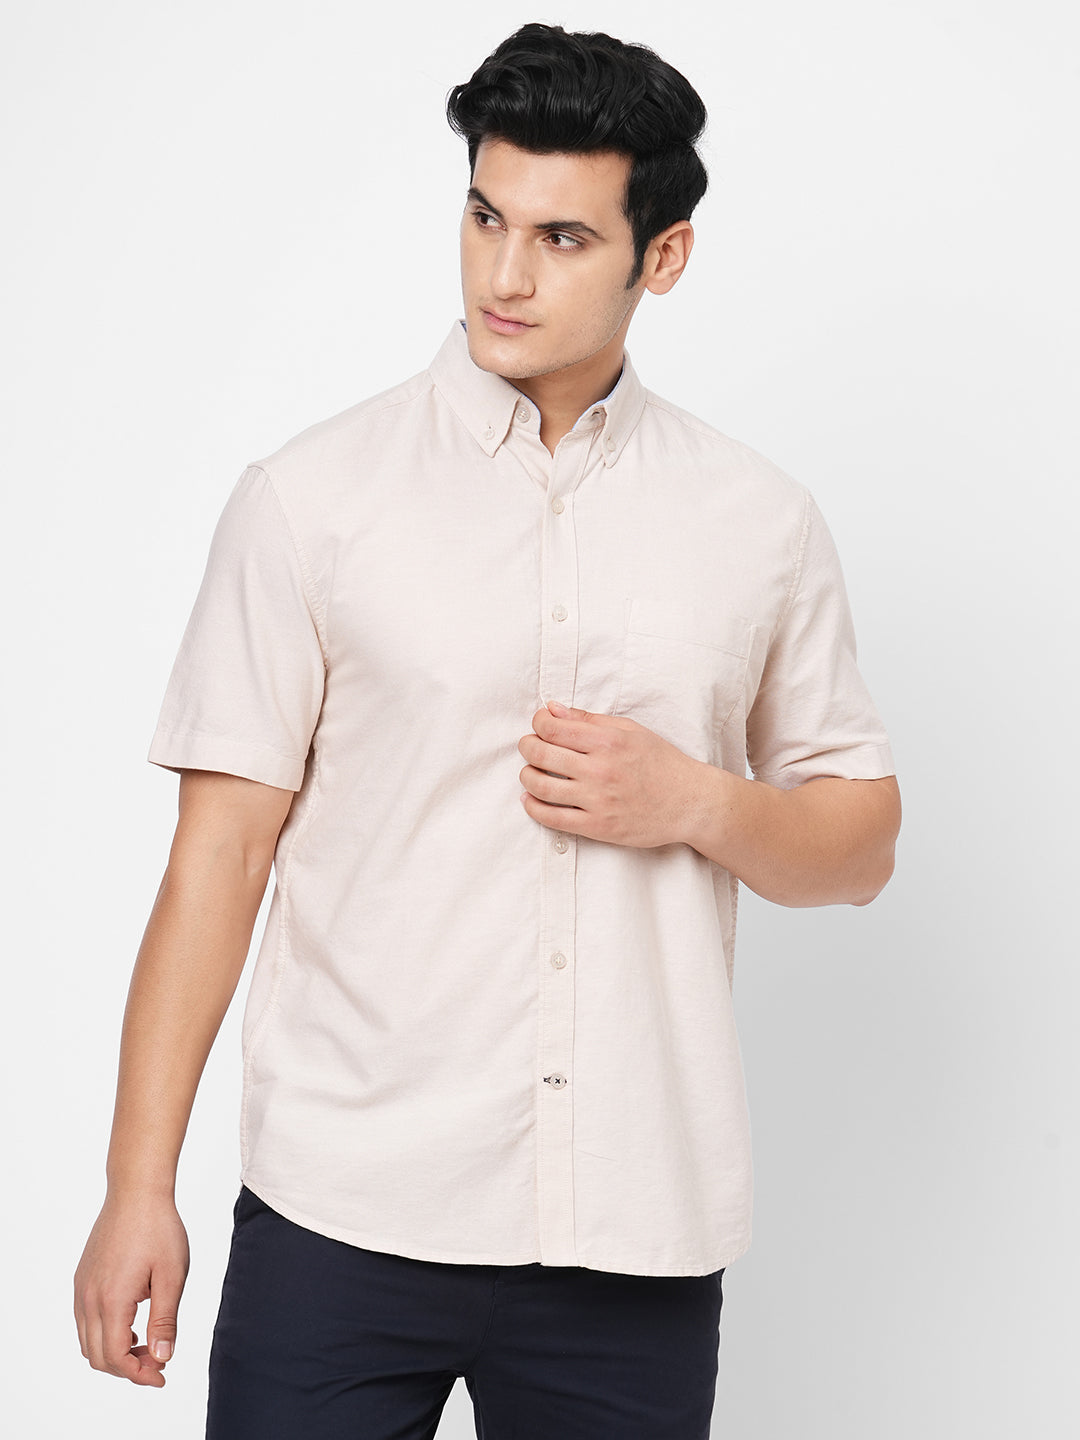 Men's Khaki Oxford Cotton Regular Fit Shirts